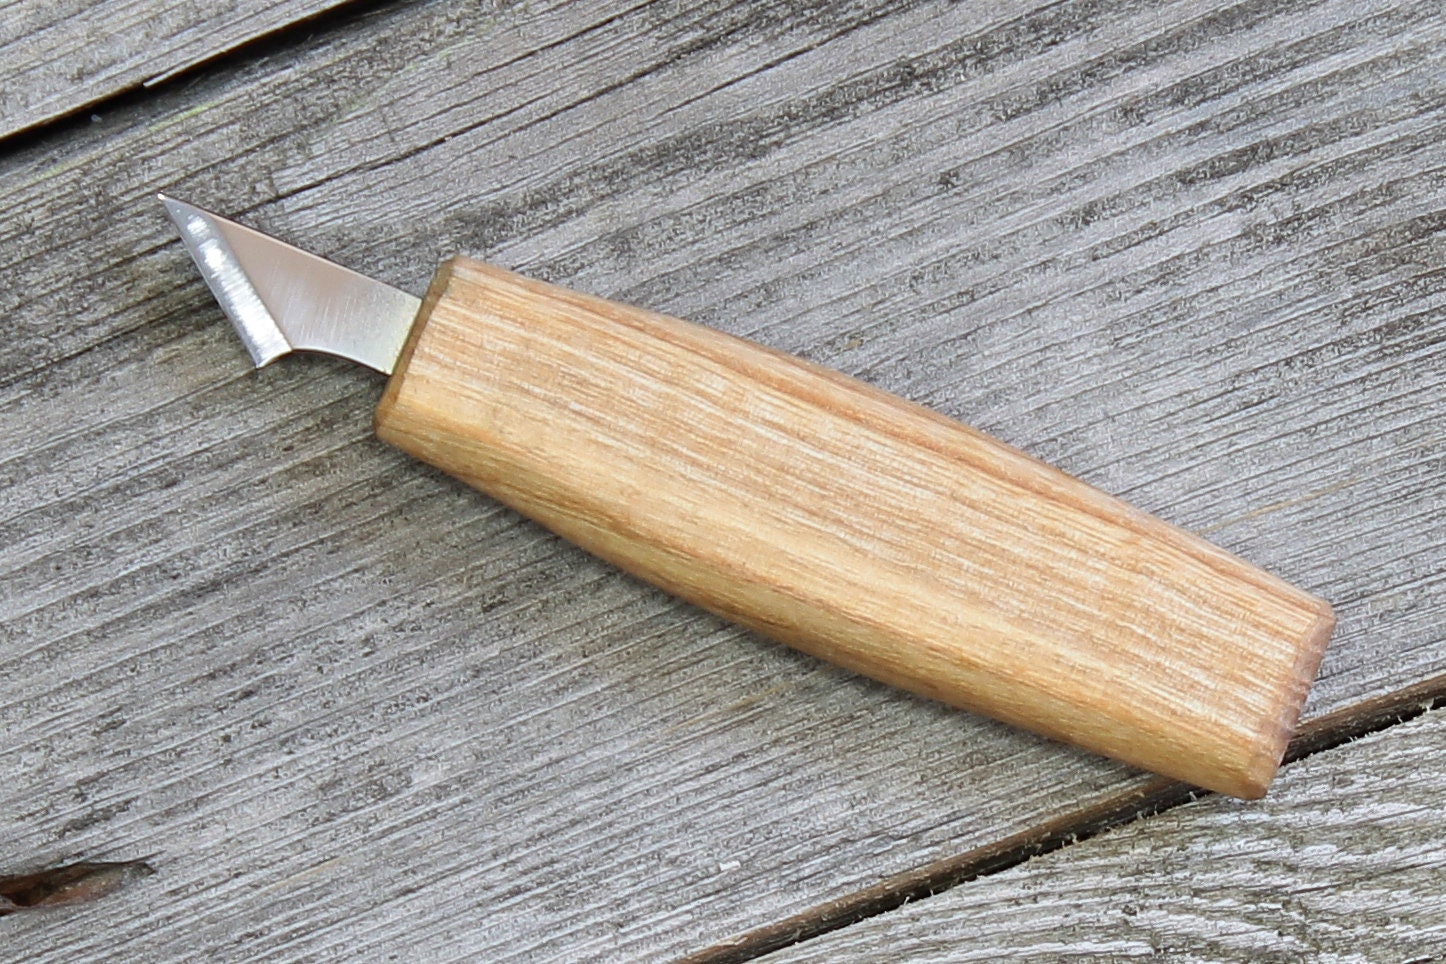 Wood Carving Set of 8 Knives Carving Knives Set TOP GIFT Wood Carving Tools  Woodcarving Knife Carving Knives Kit Carving Beavercraft S08 